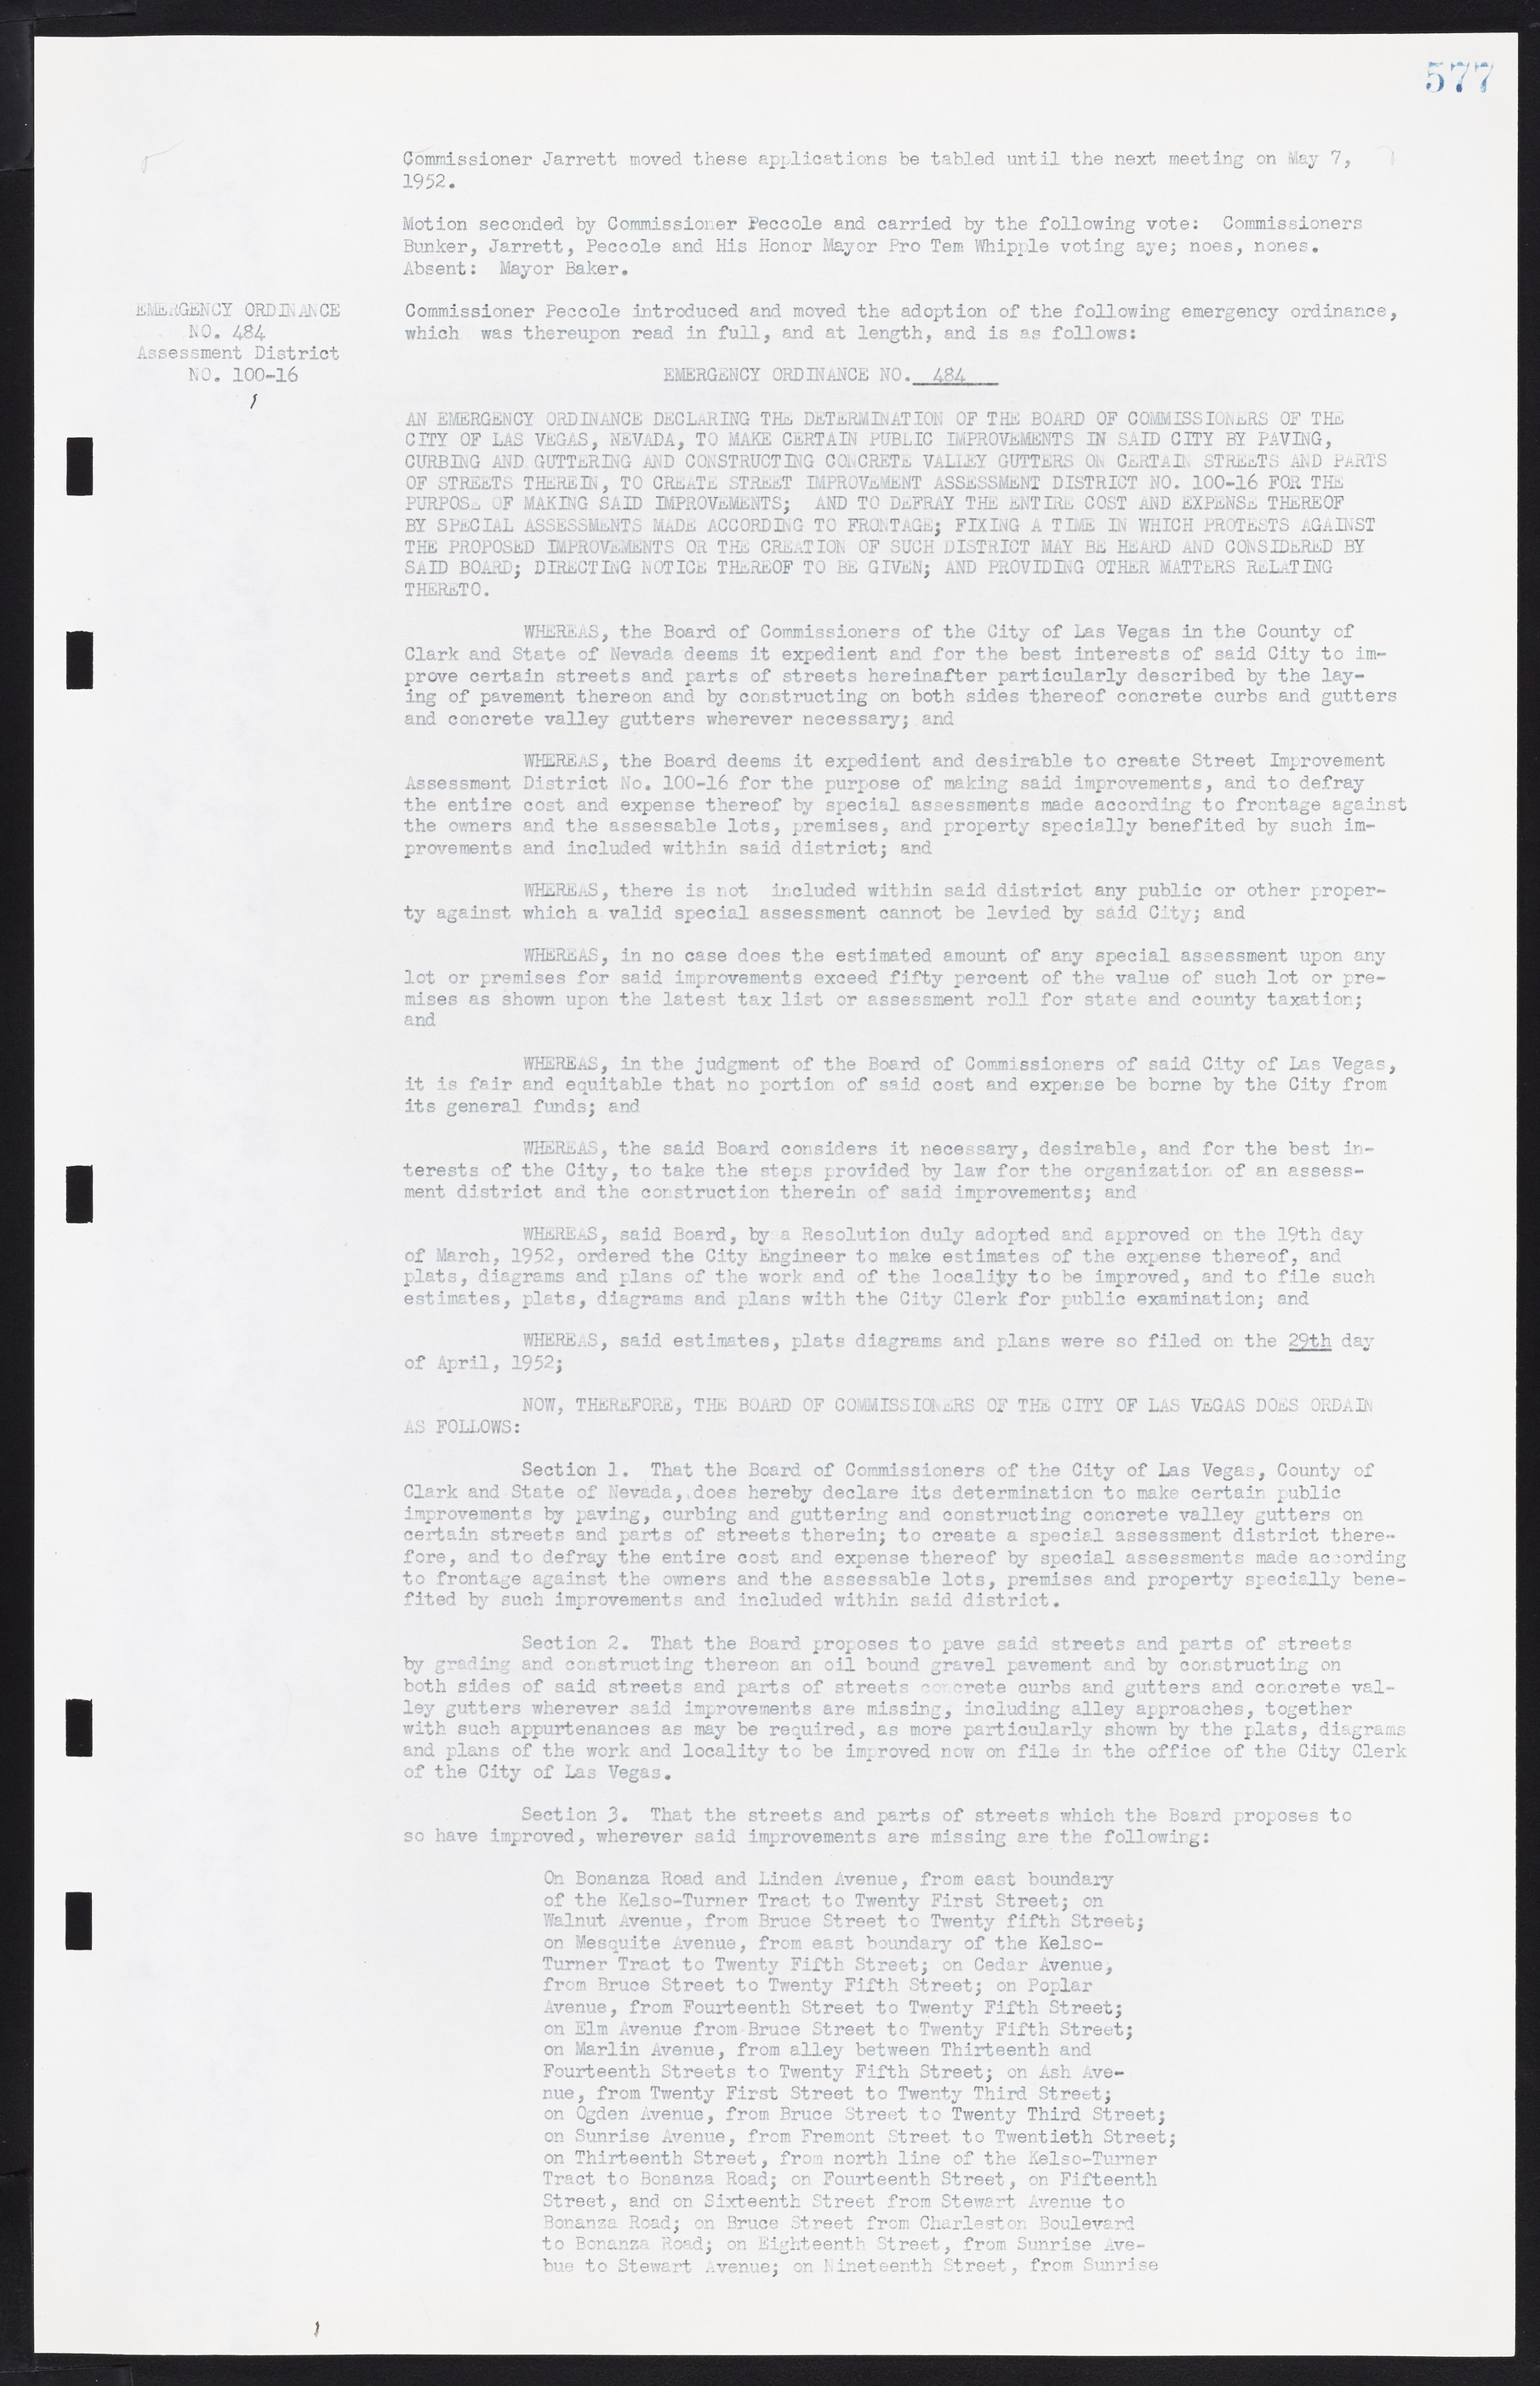 Las Vegas City Commission Minutes, November 7, 1949 to May 21, 1952, lvc000007-595